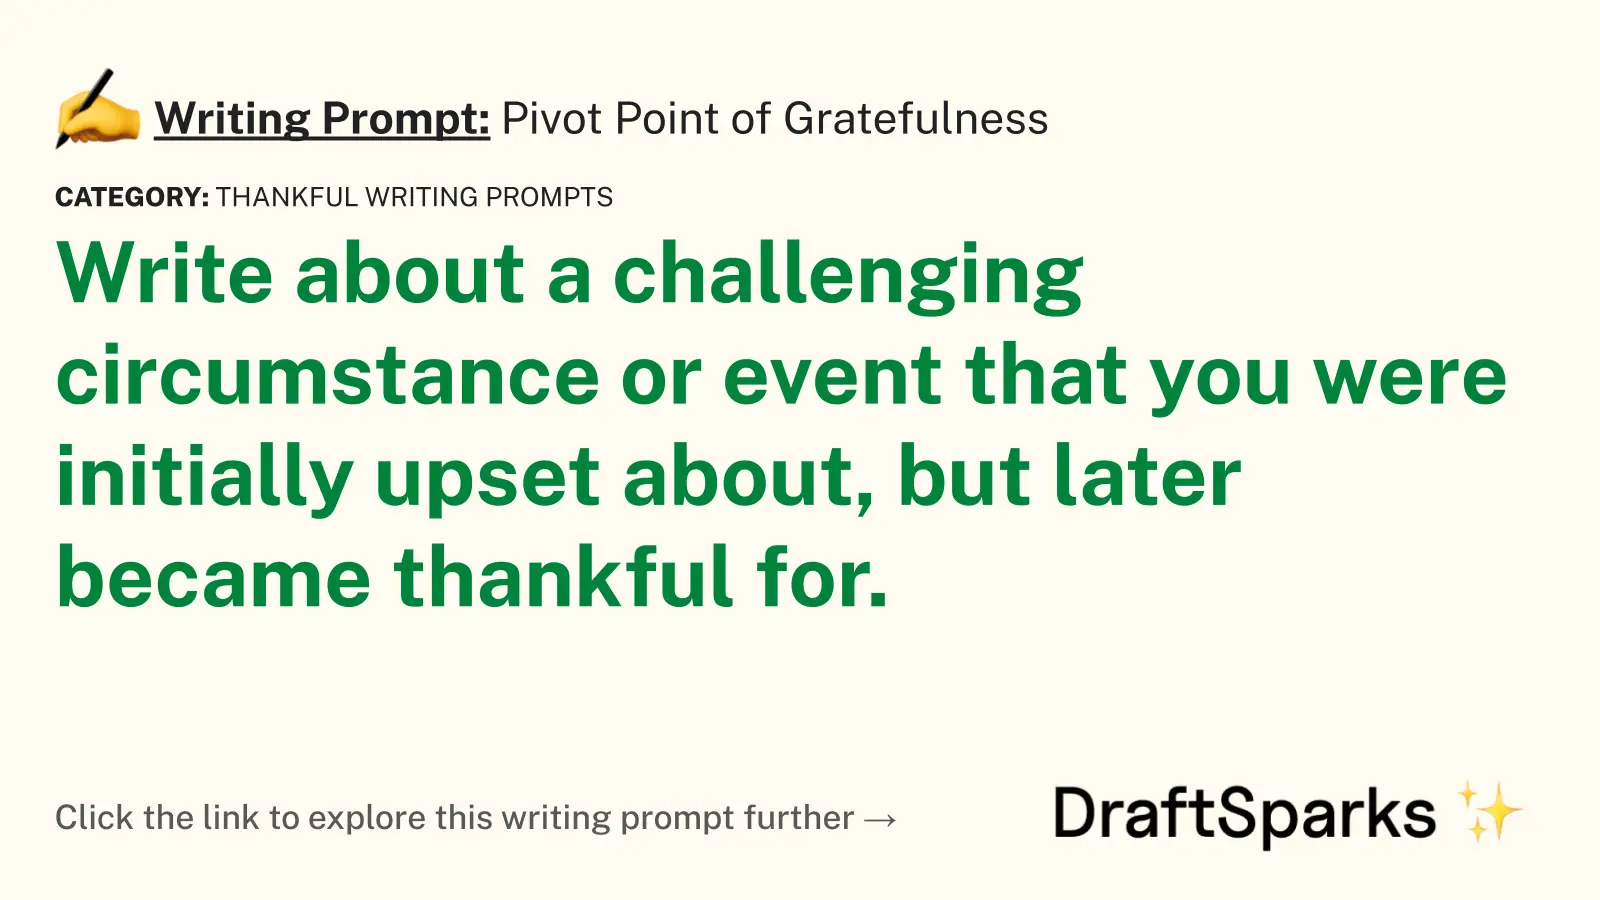 Pivot Point of Gratefulness